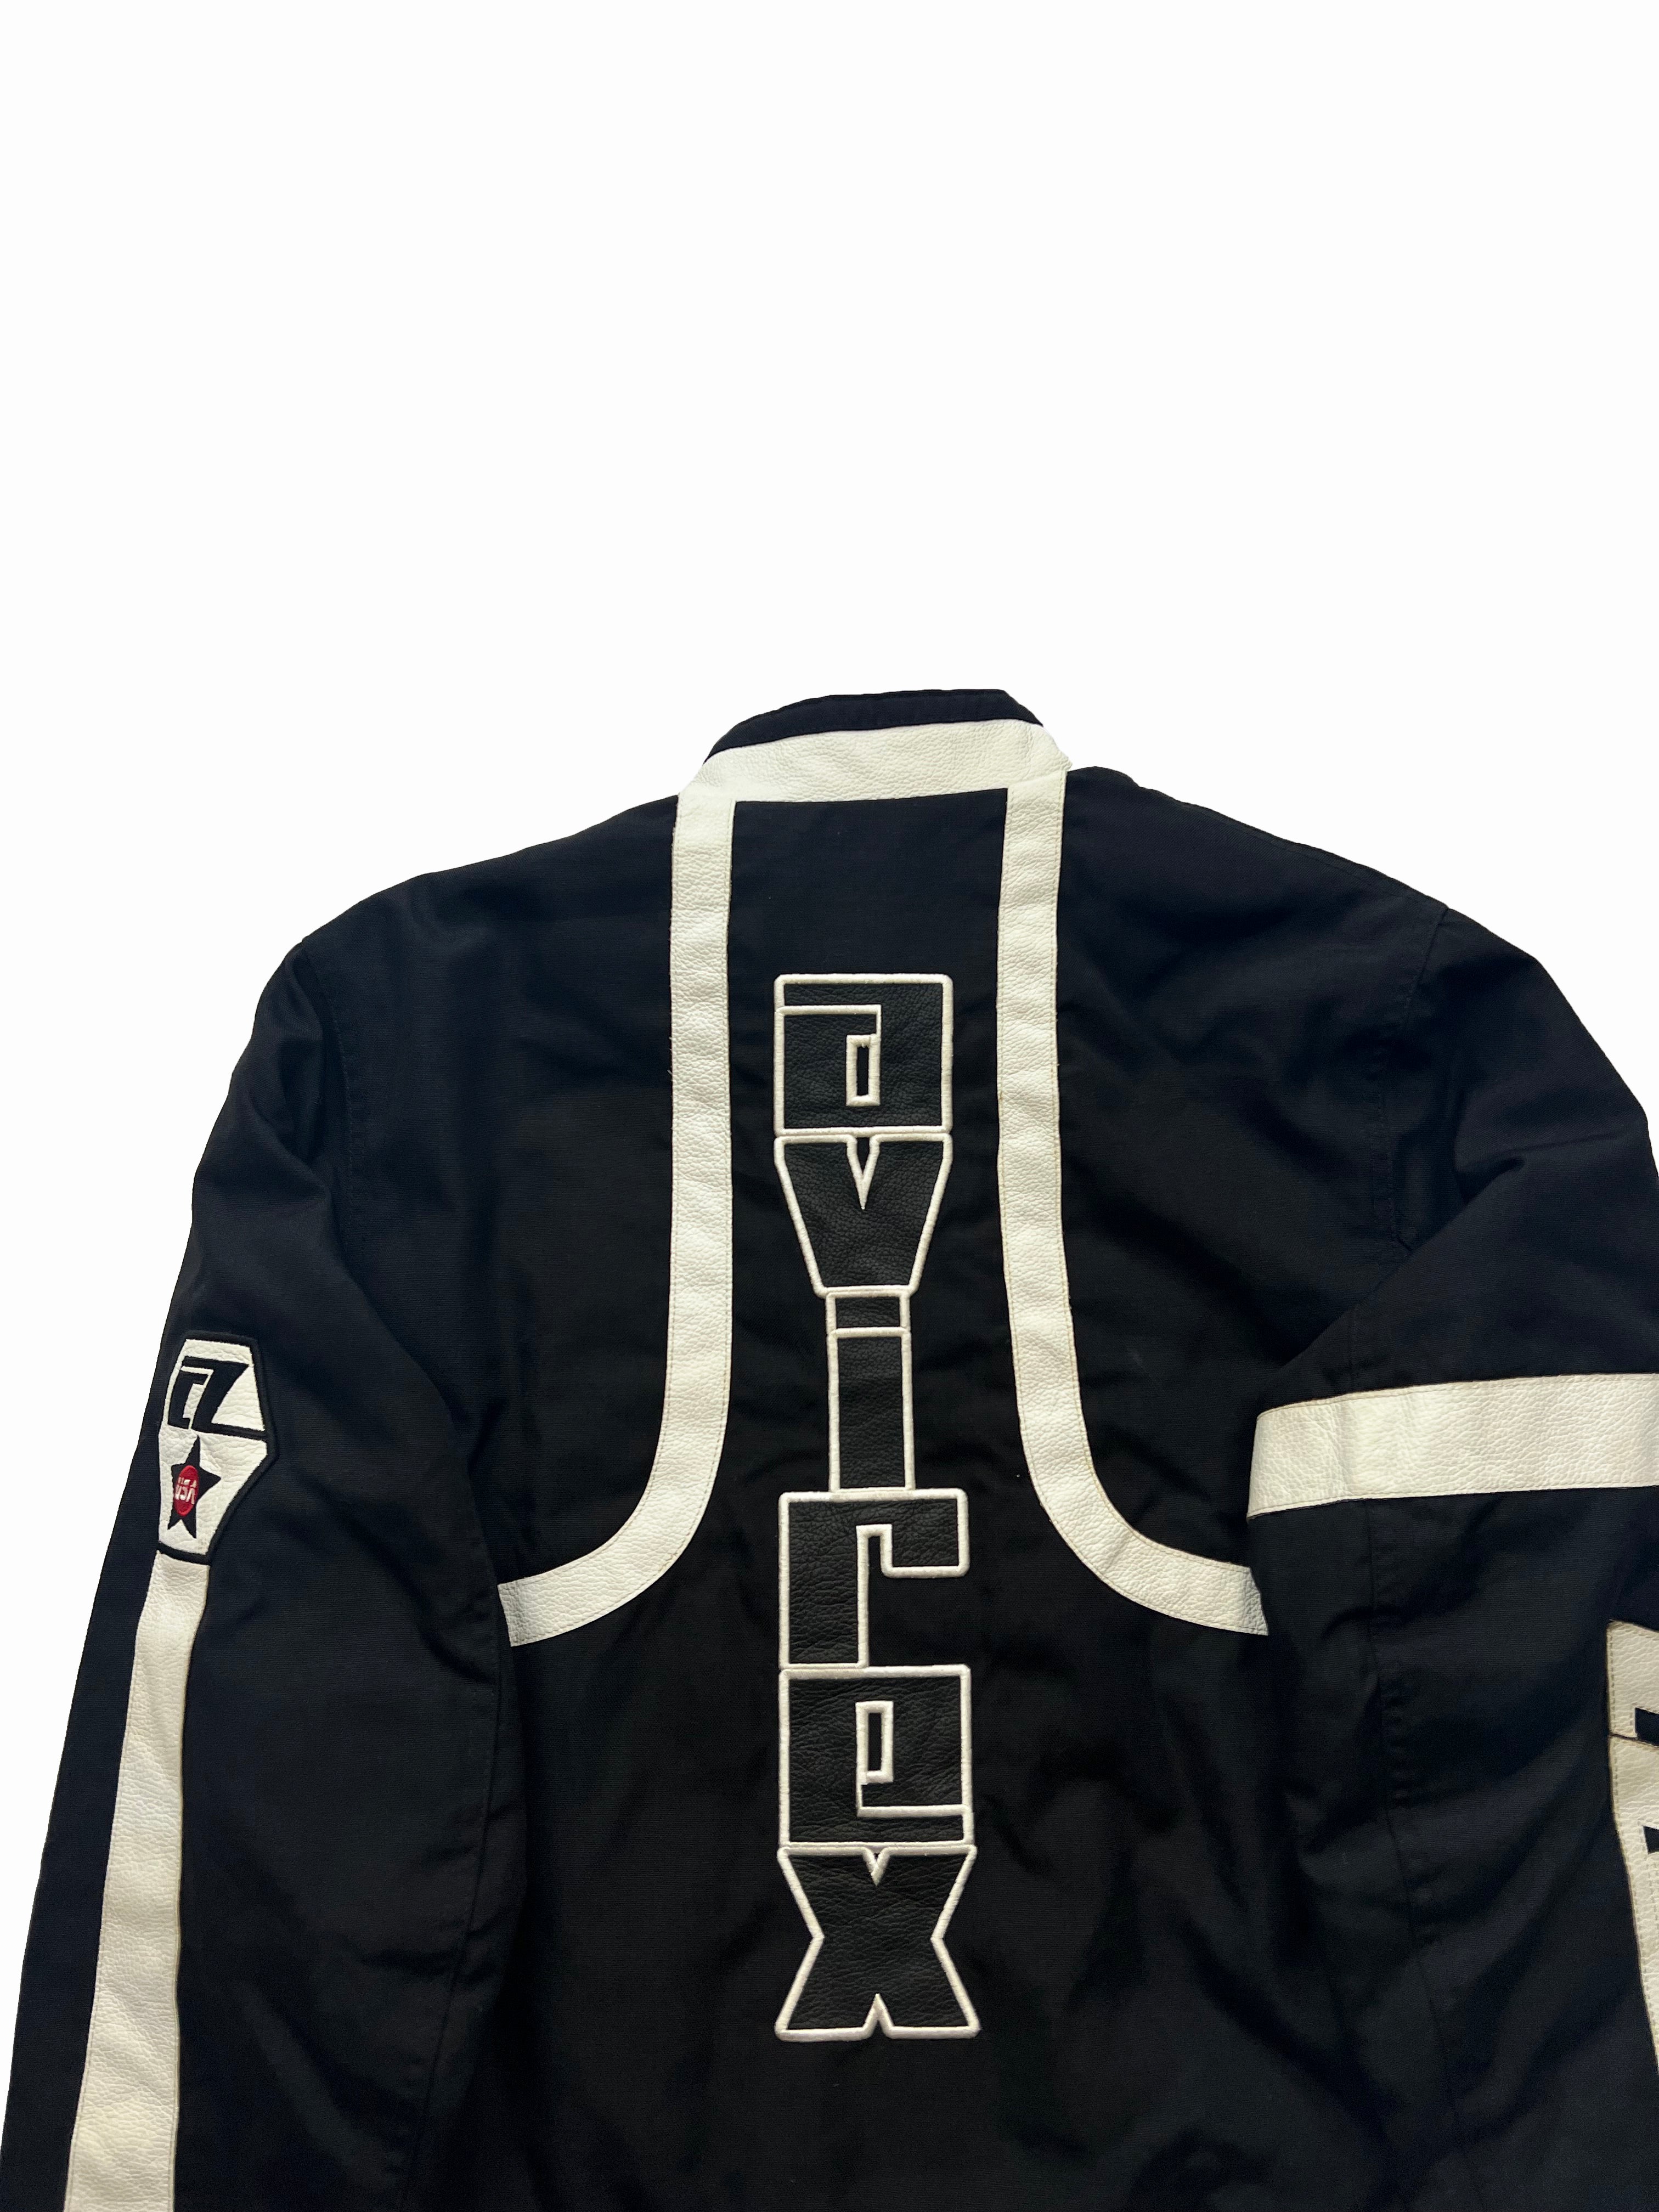 Avirex Black Motorcycle Jacket 90's